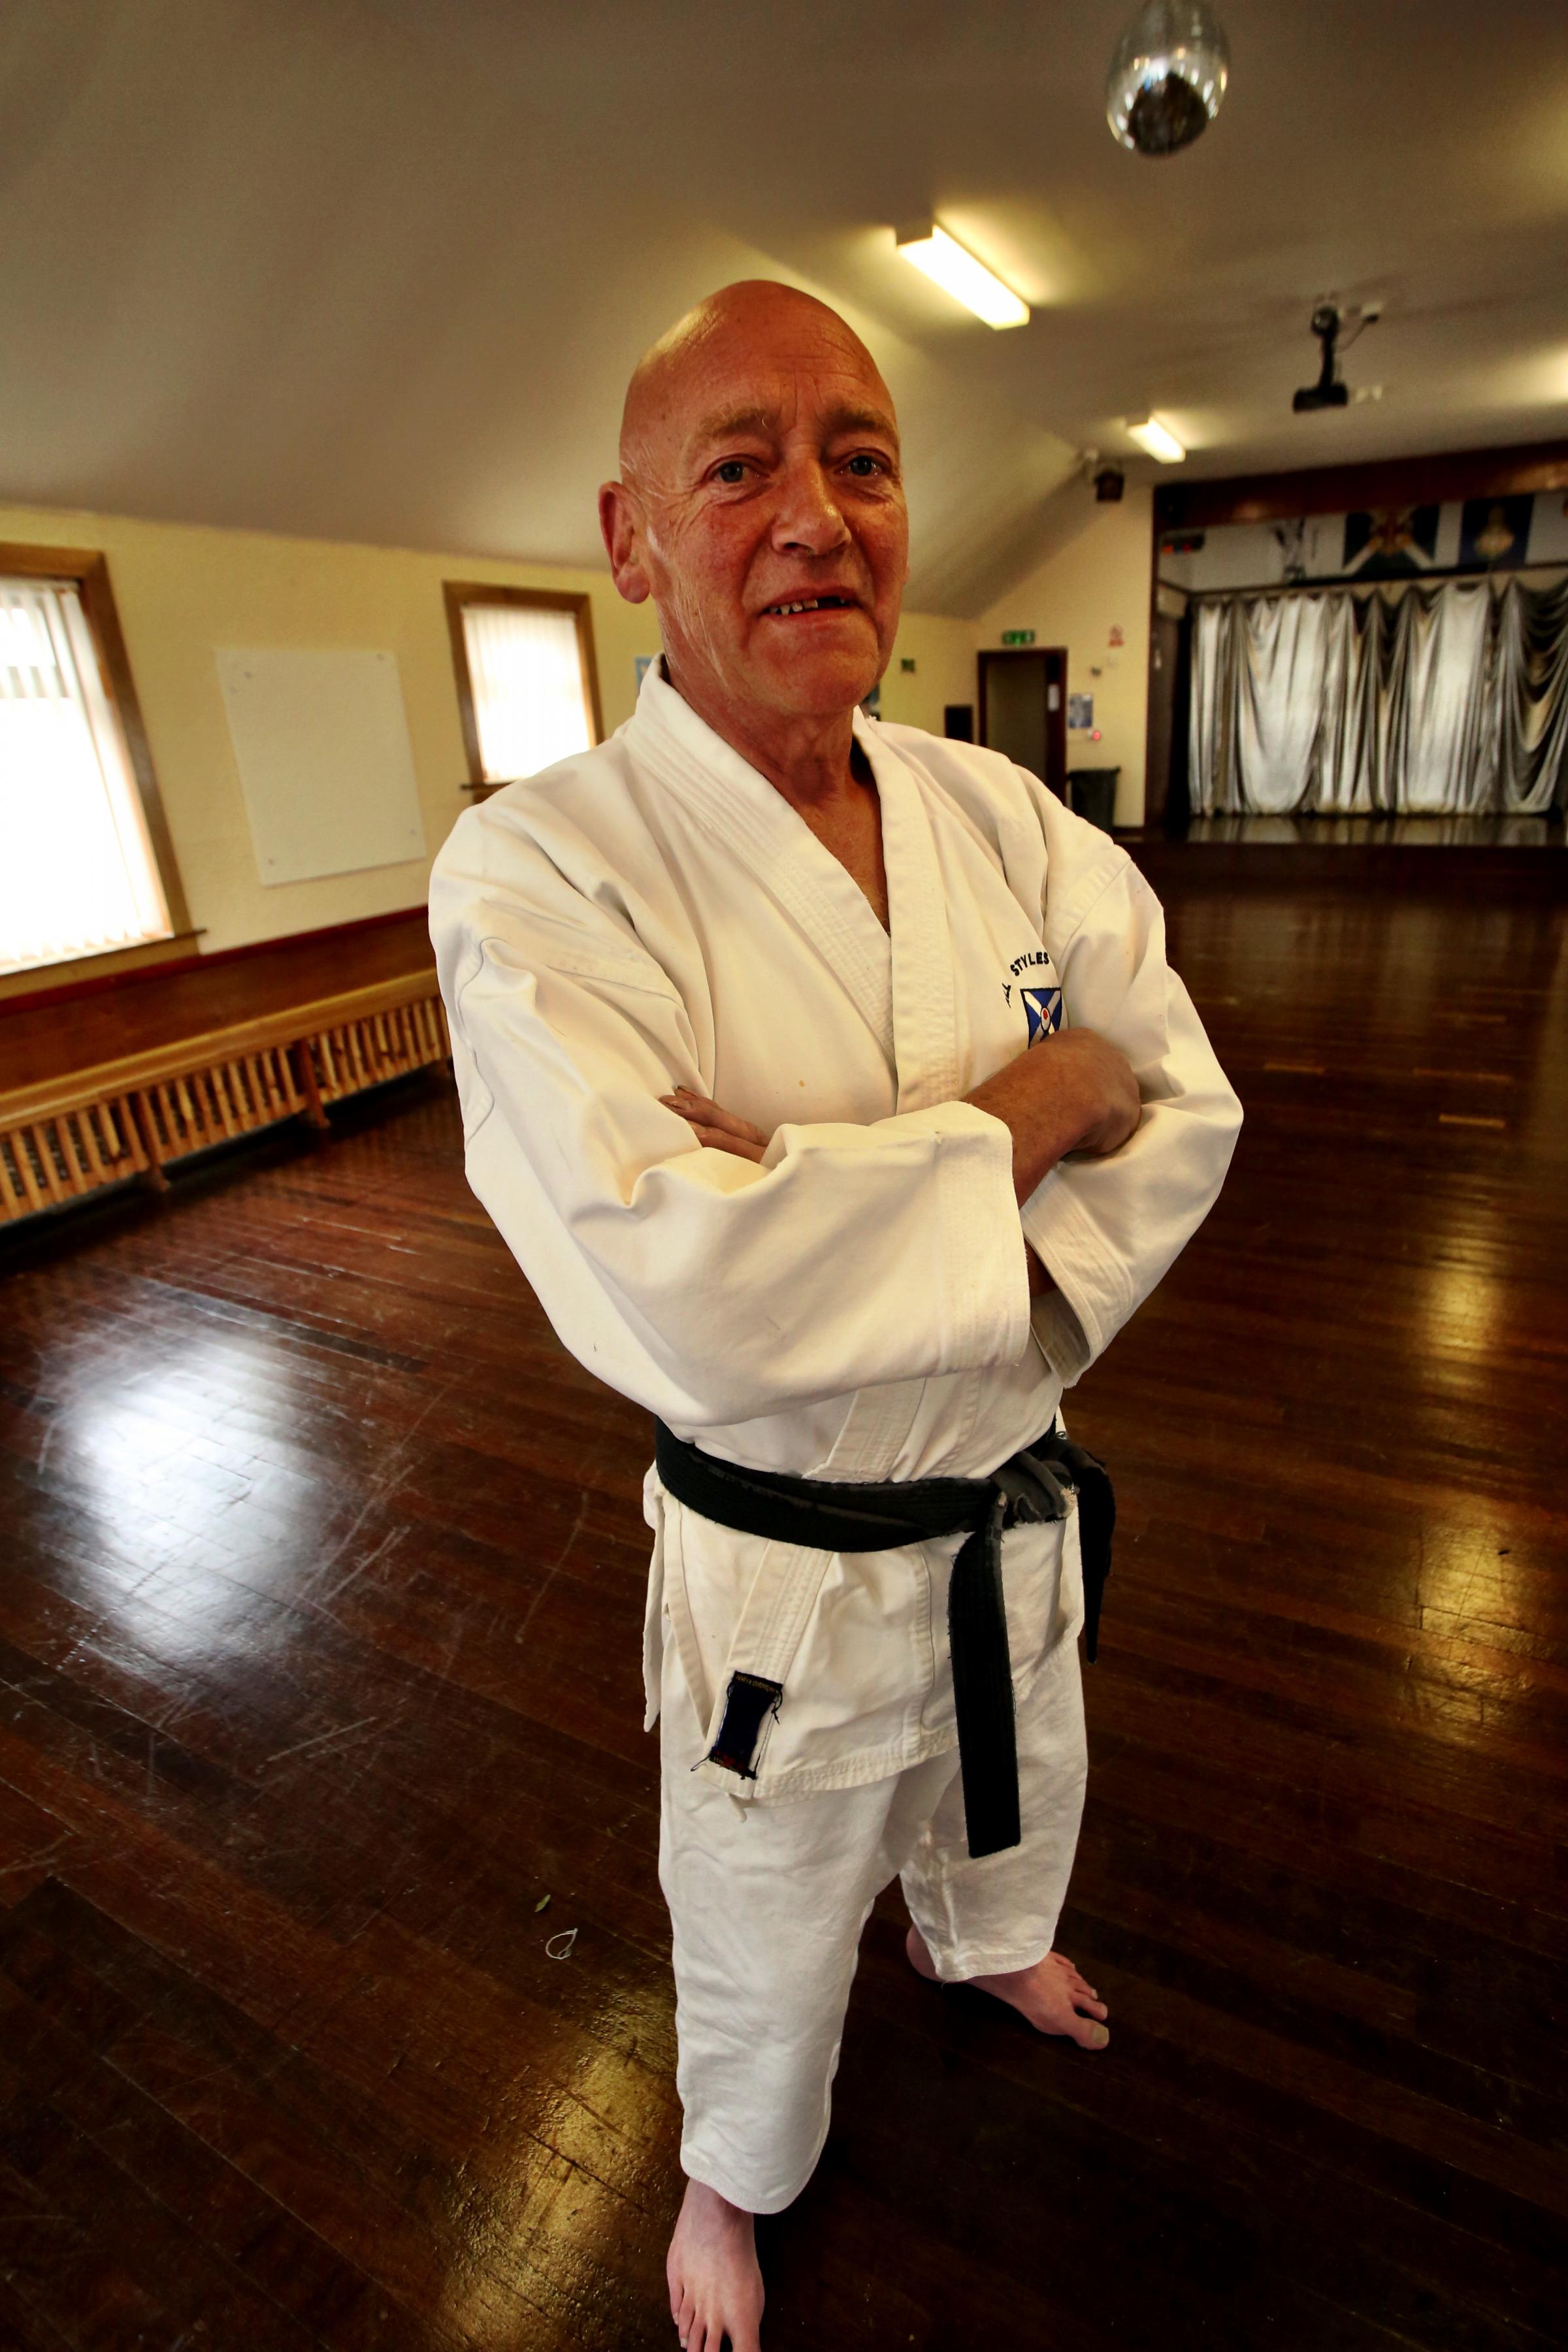 Port karate club under threat of closure - Greenock Telegraph